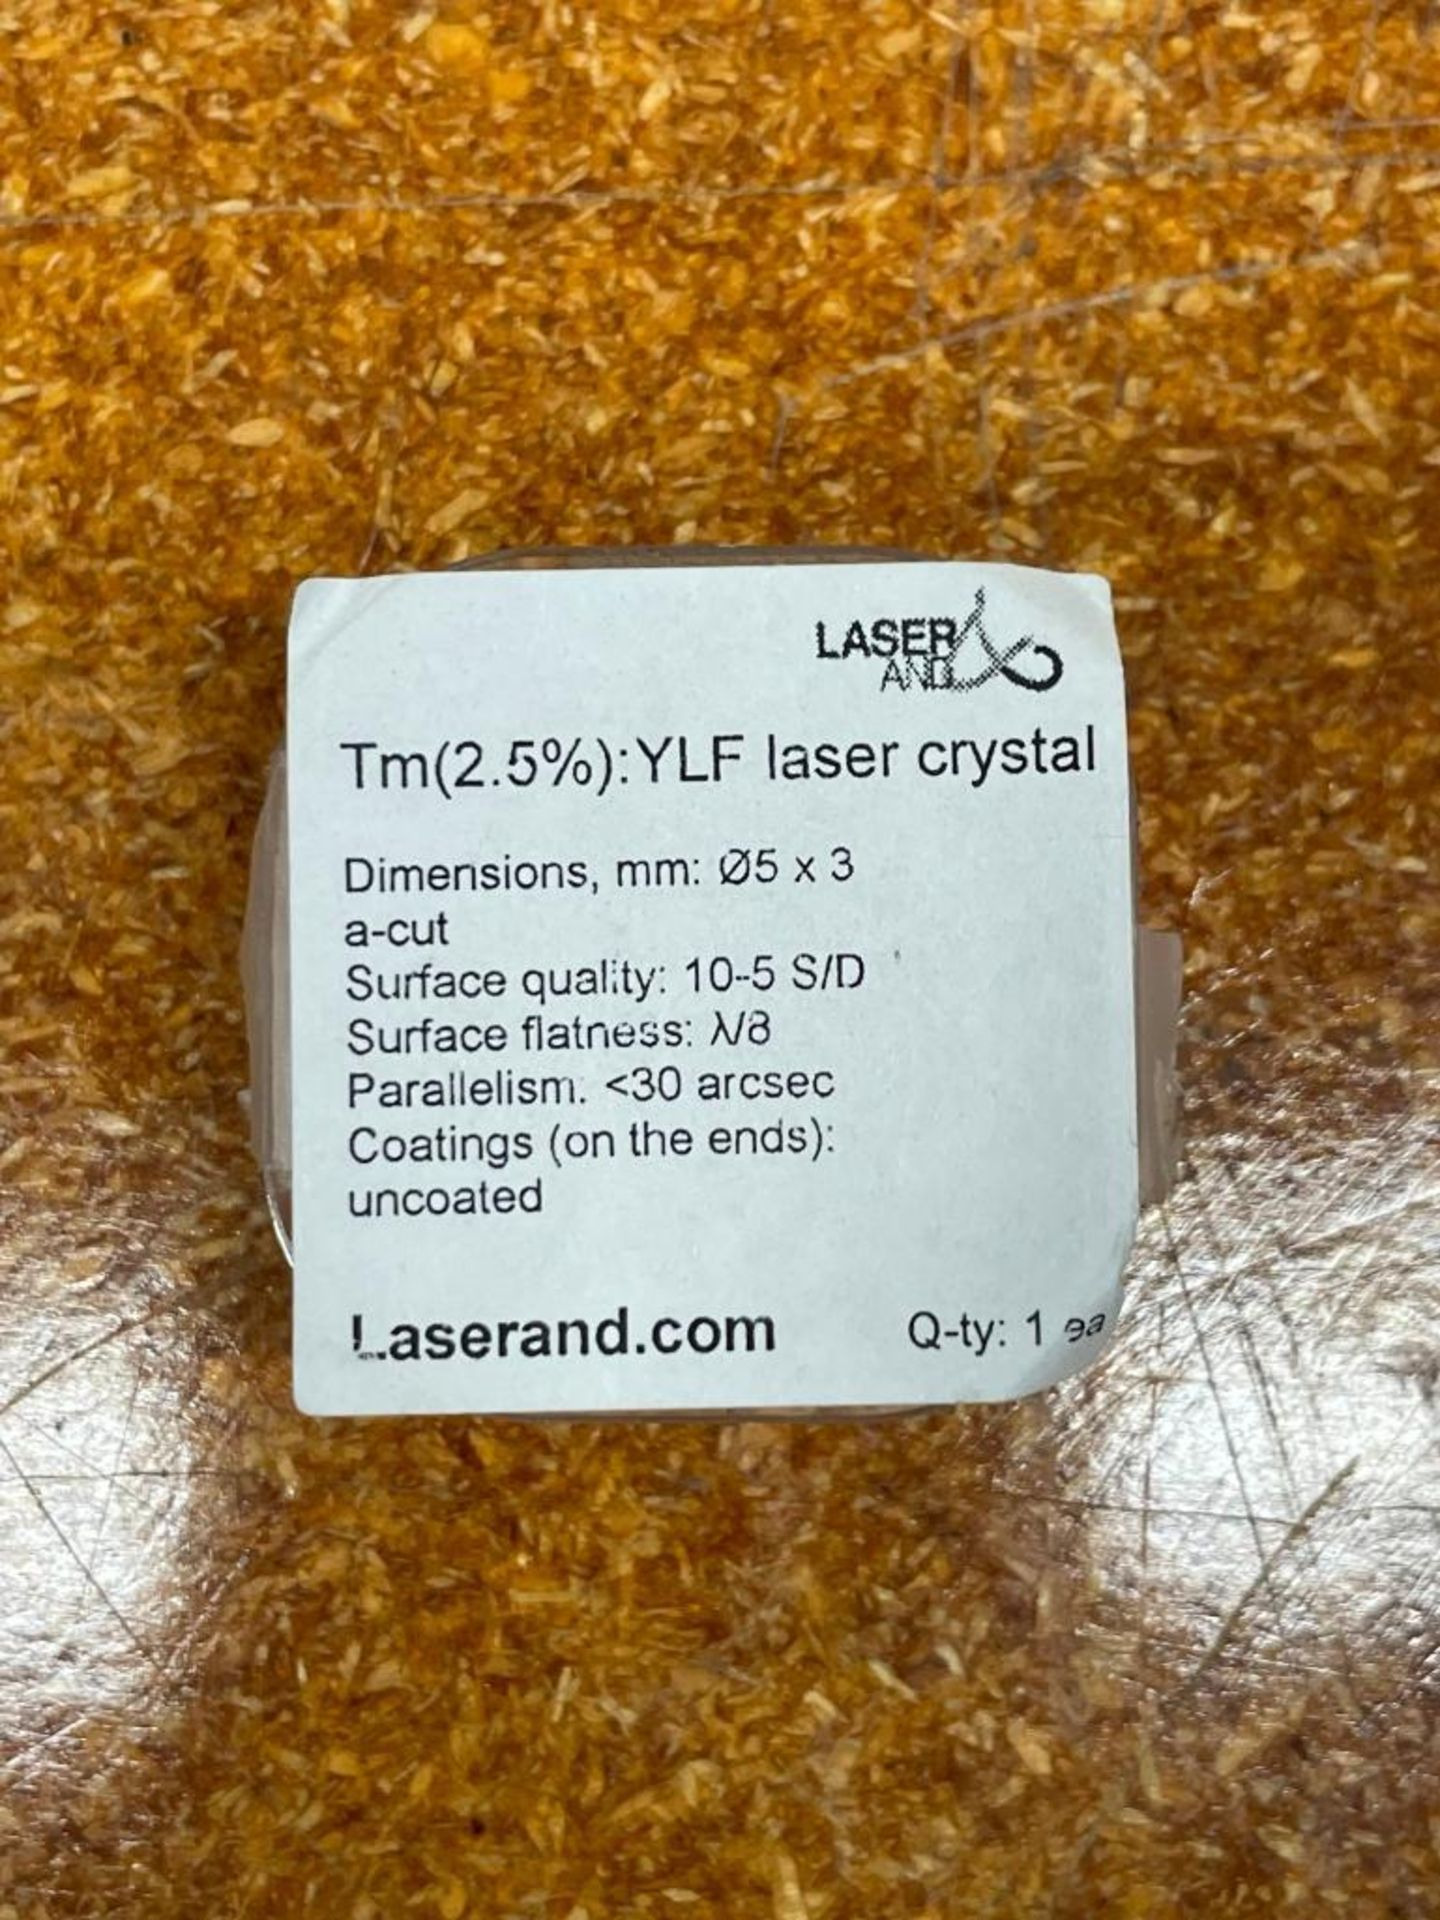 Tm:YLF LASER CRYSTAL BRAND/MODEL: LASERAND INFORMATION: 2.5% Tm, A-CUT, 5mm DIAMETER, 3mm THICK RETA - Image 3 of 3